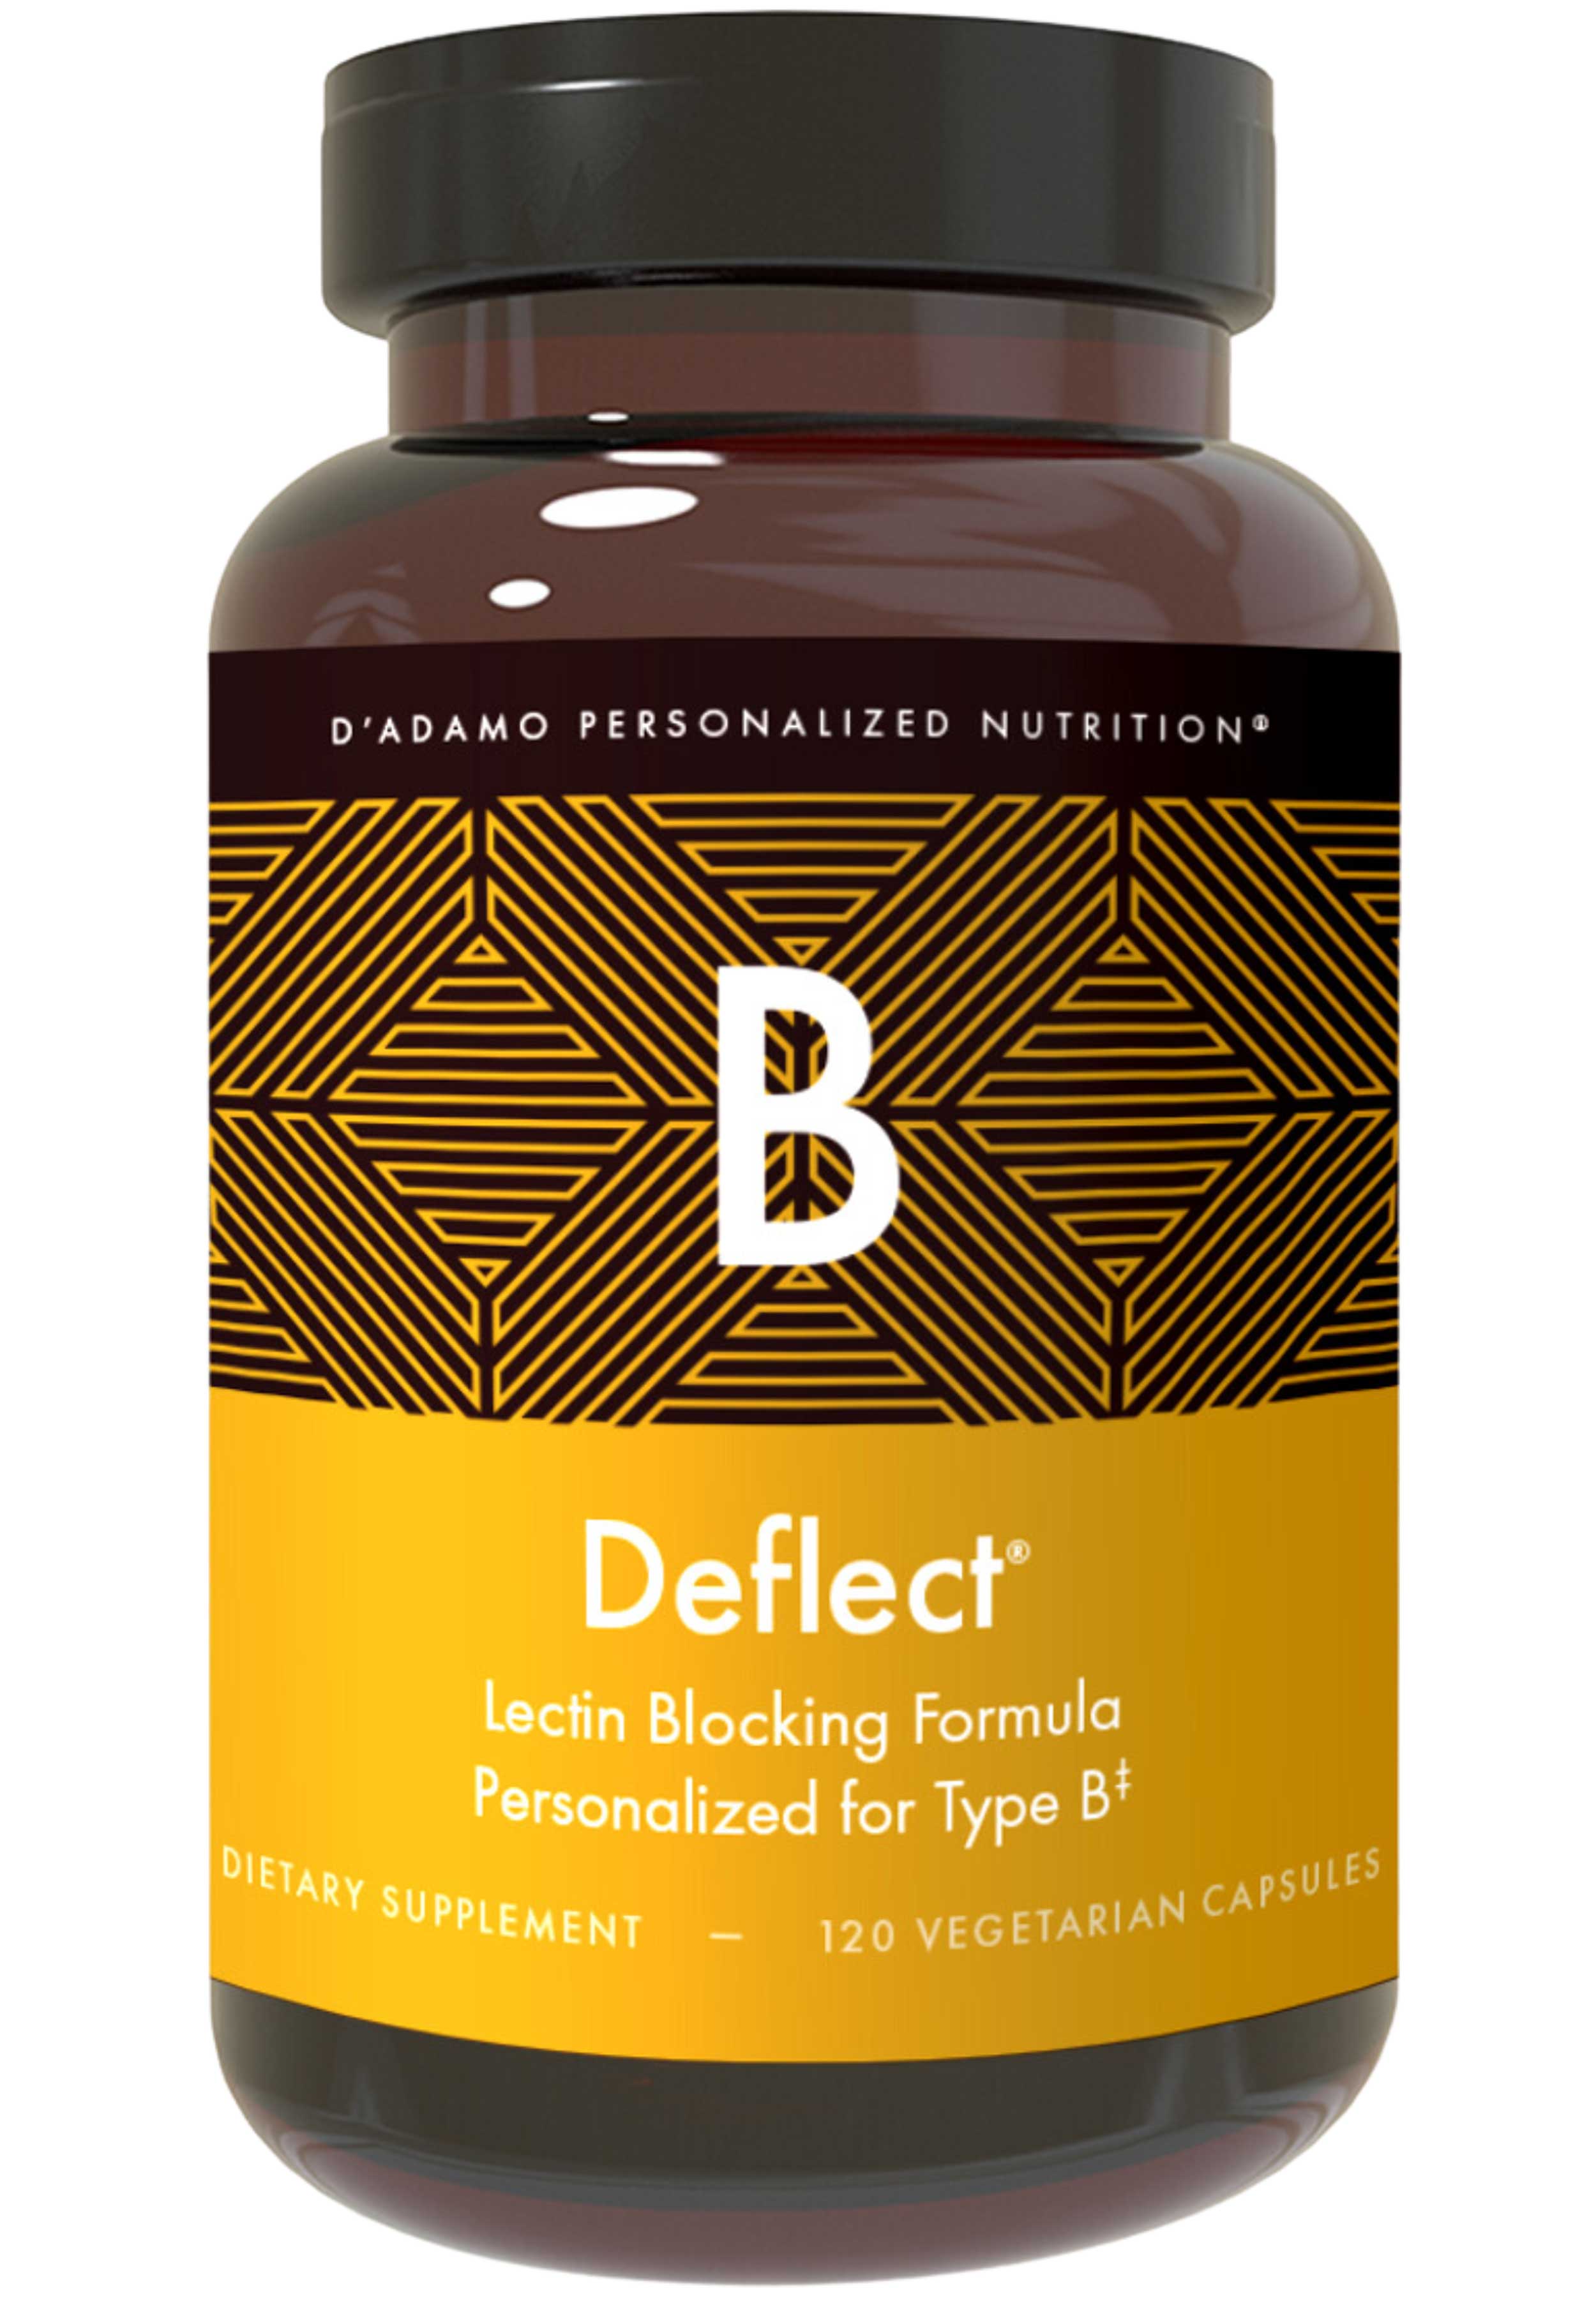 D'Adamo Personalized Nutrition Deflect B